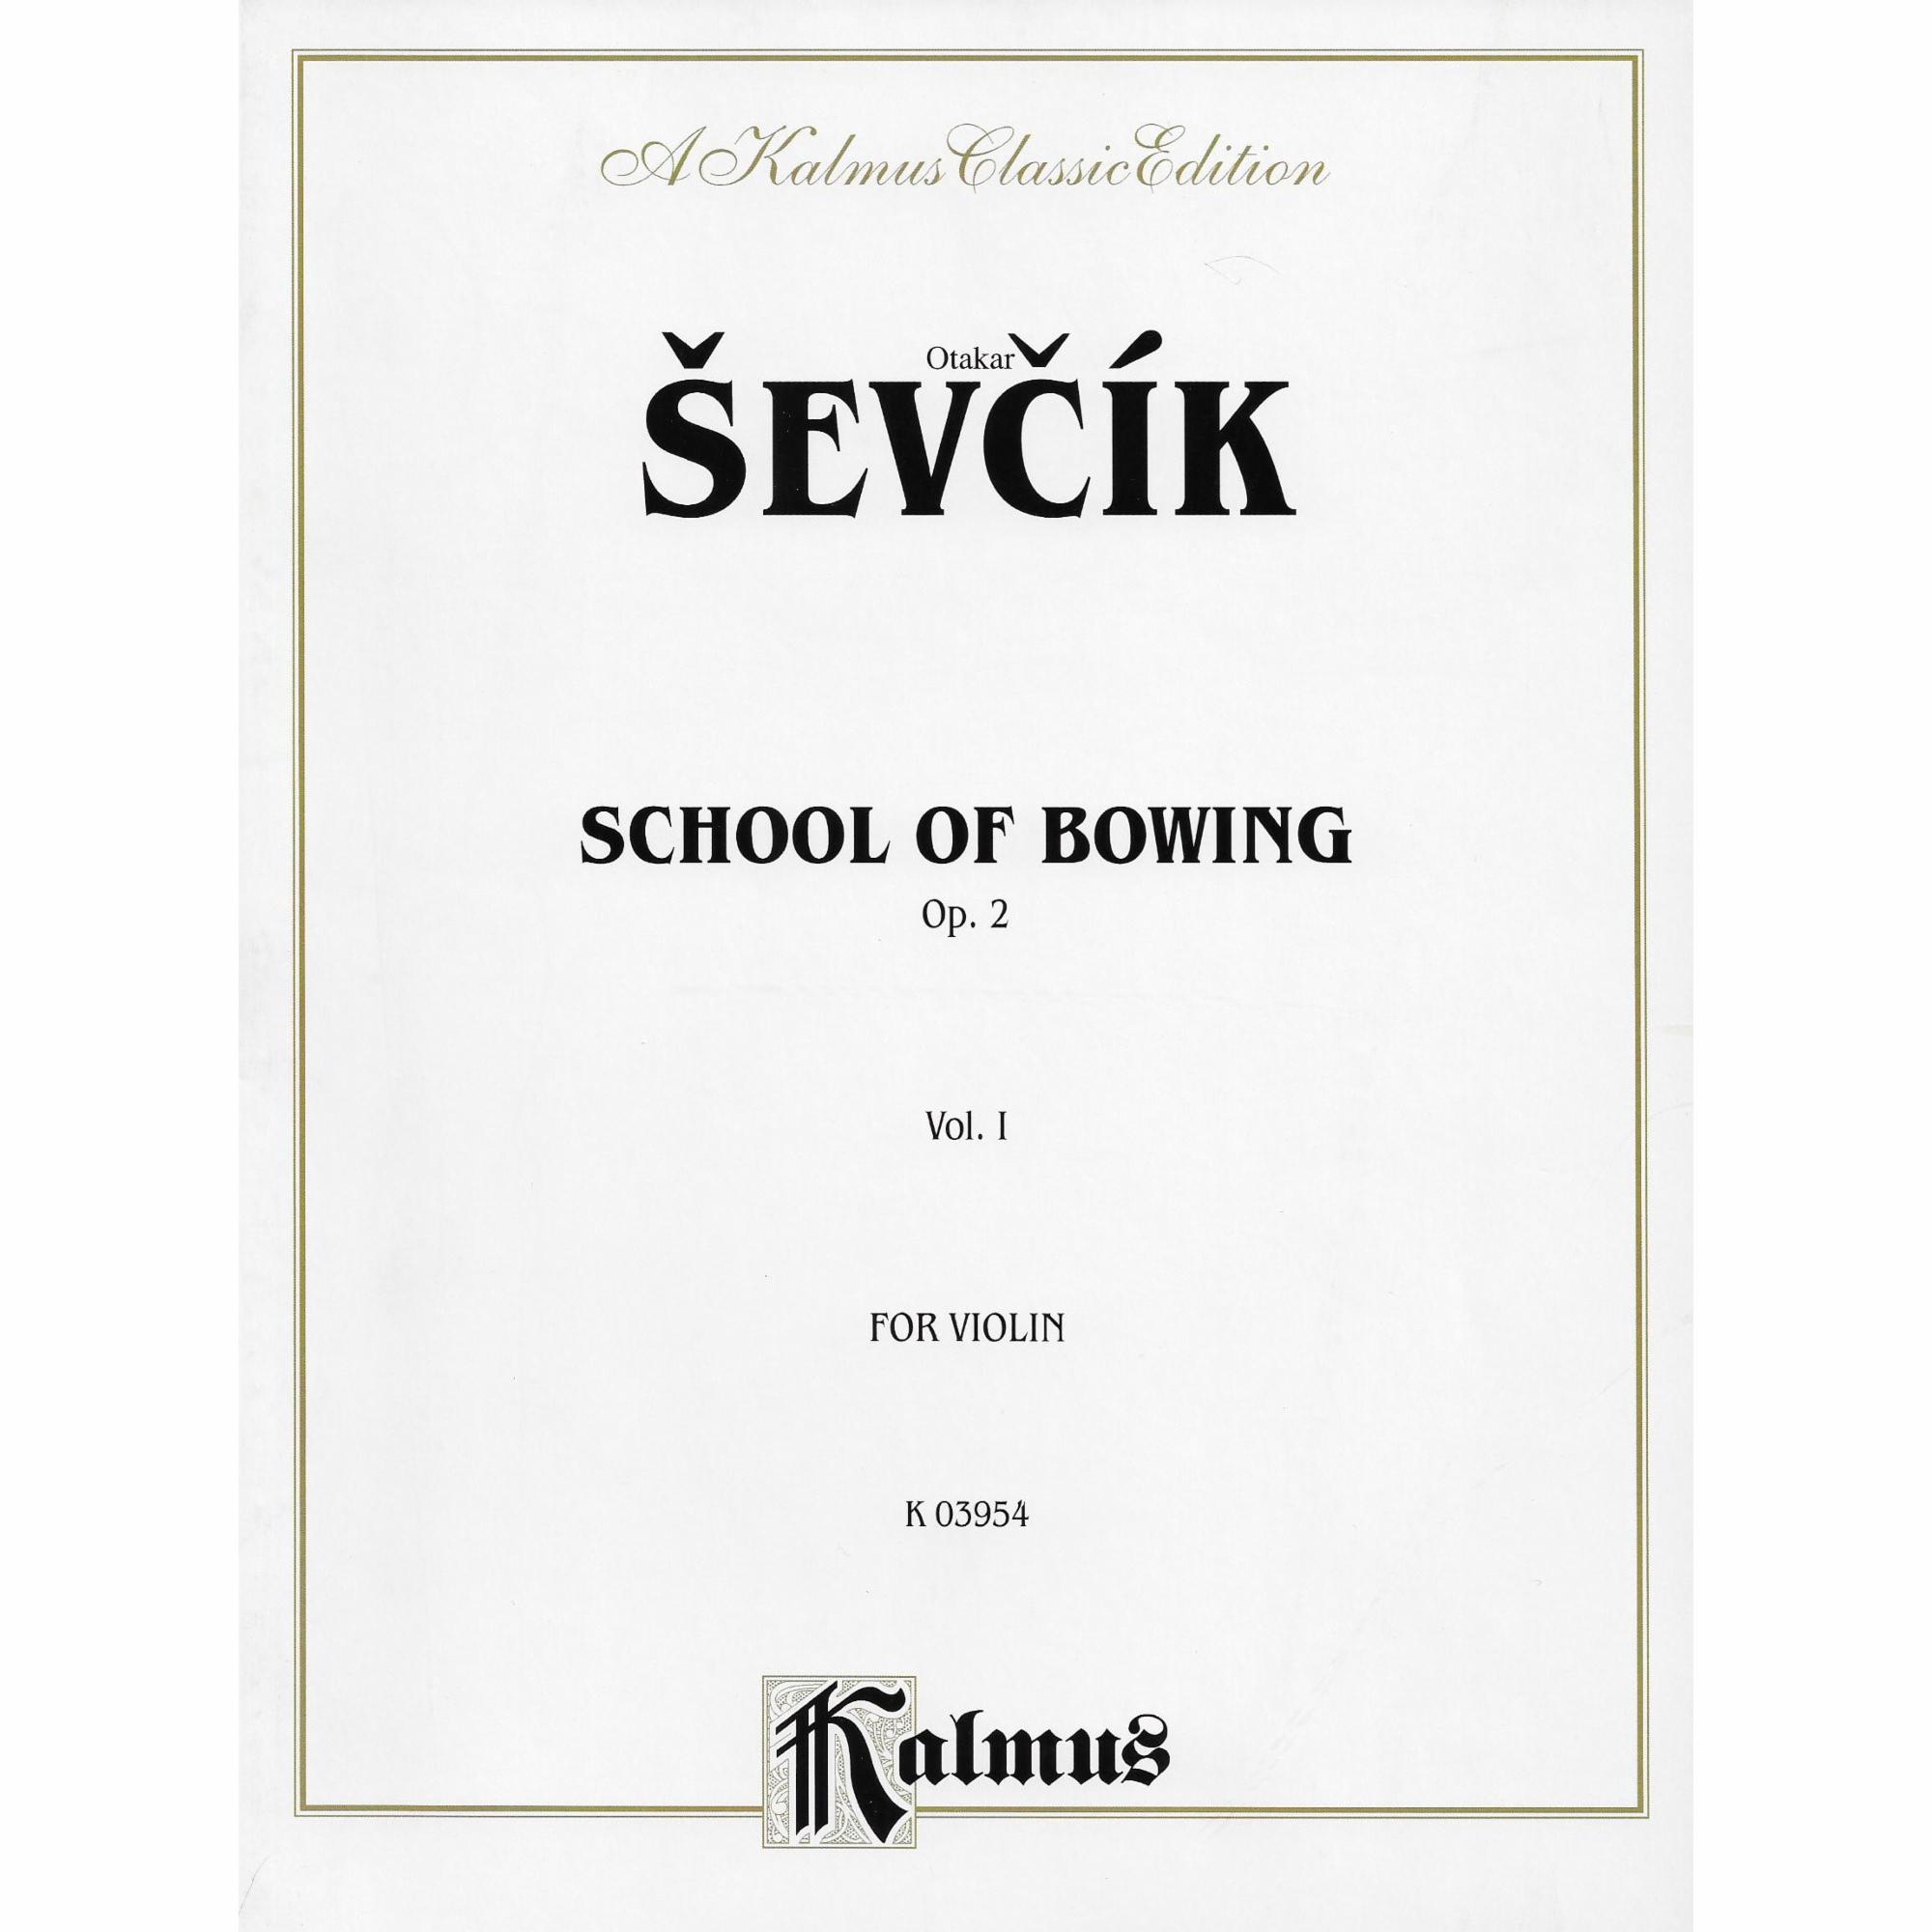 Sevcik -- School of Bowing, Op. 2, Vol. 1 for Violin